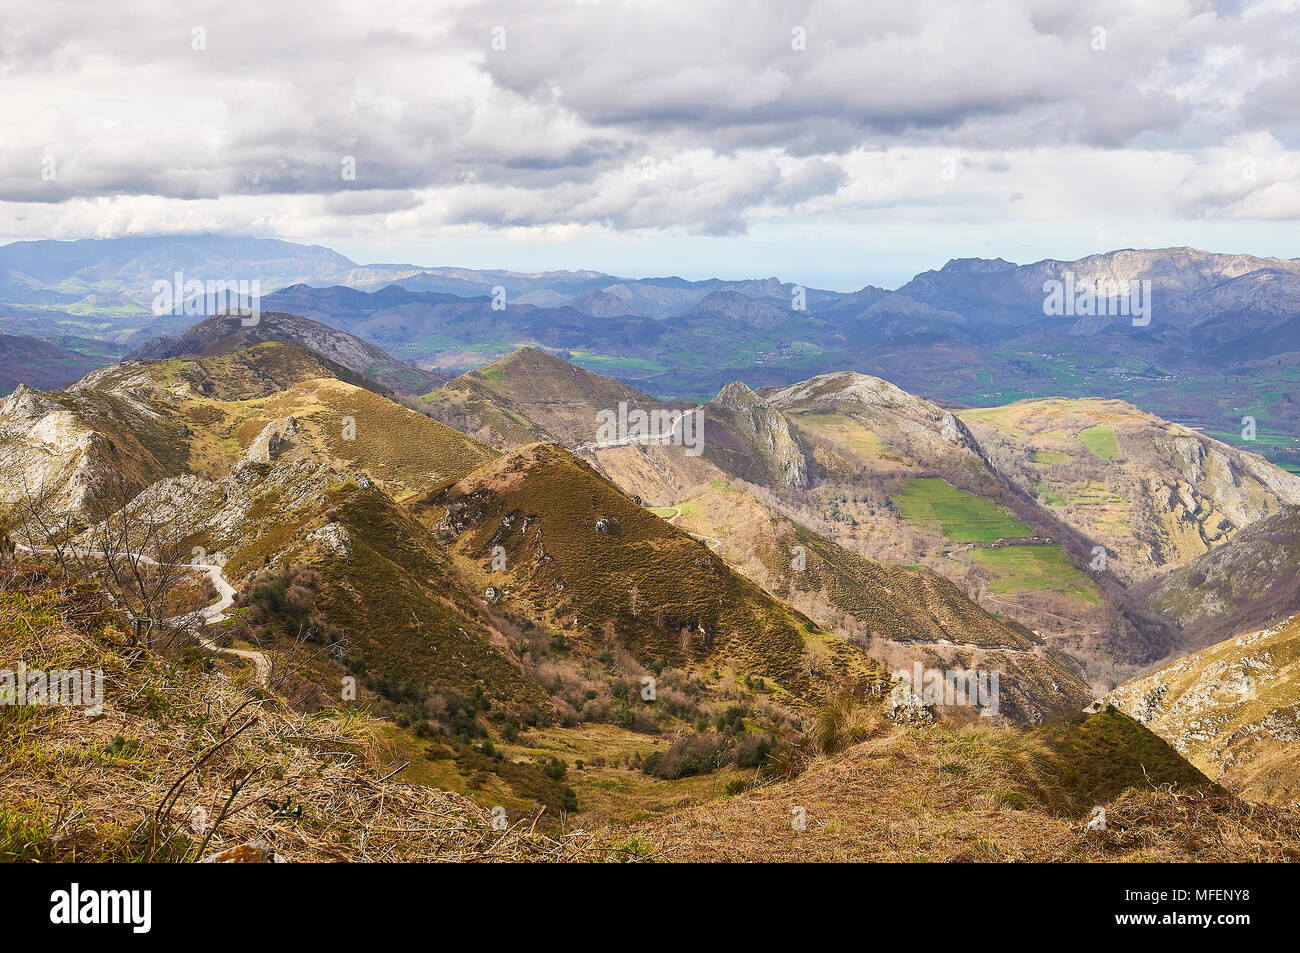 Landscape view of Cantabrian mountain range from Mirador de la Reina  overlook in Picos de Europa National Park (Cangas de Onís, Asturias, Spain  Stock Photo - Alamy